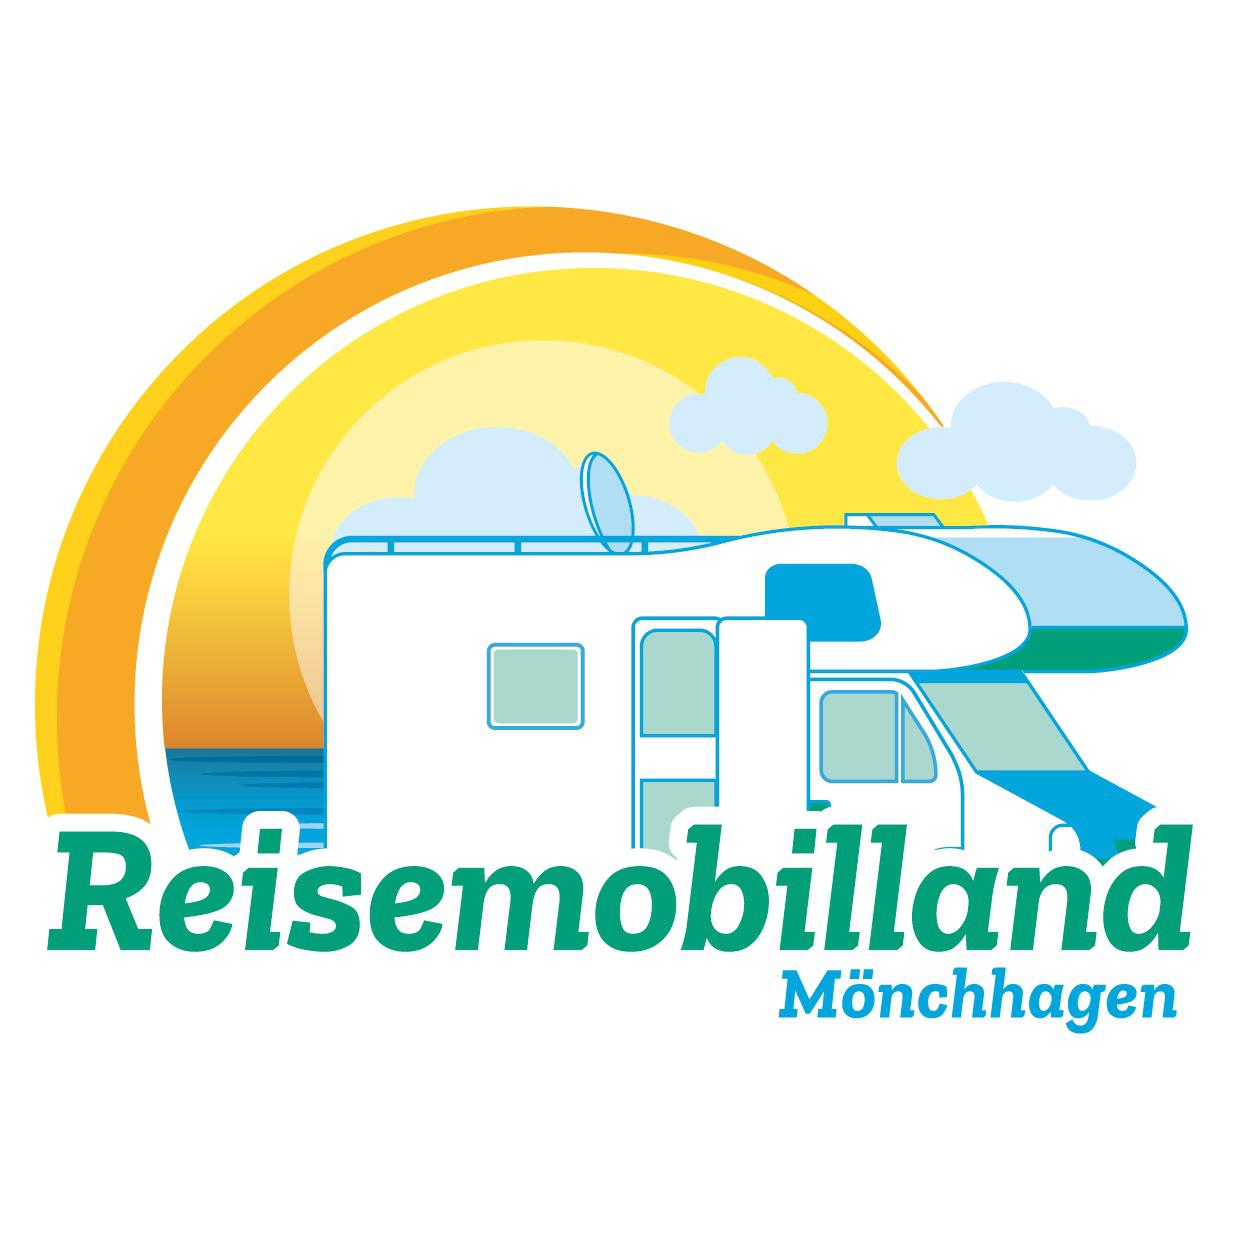 Reisemobilland Mönchhagen Inh. Lars Riemer in Mönchhagen - Logo